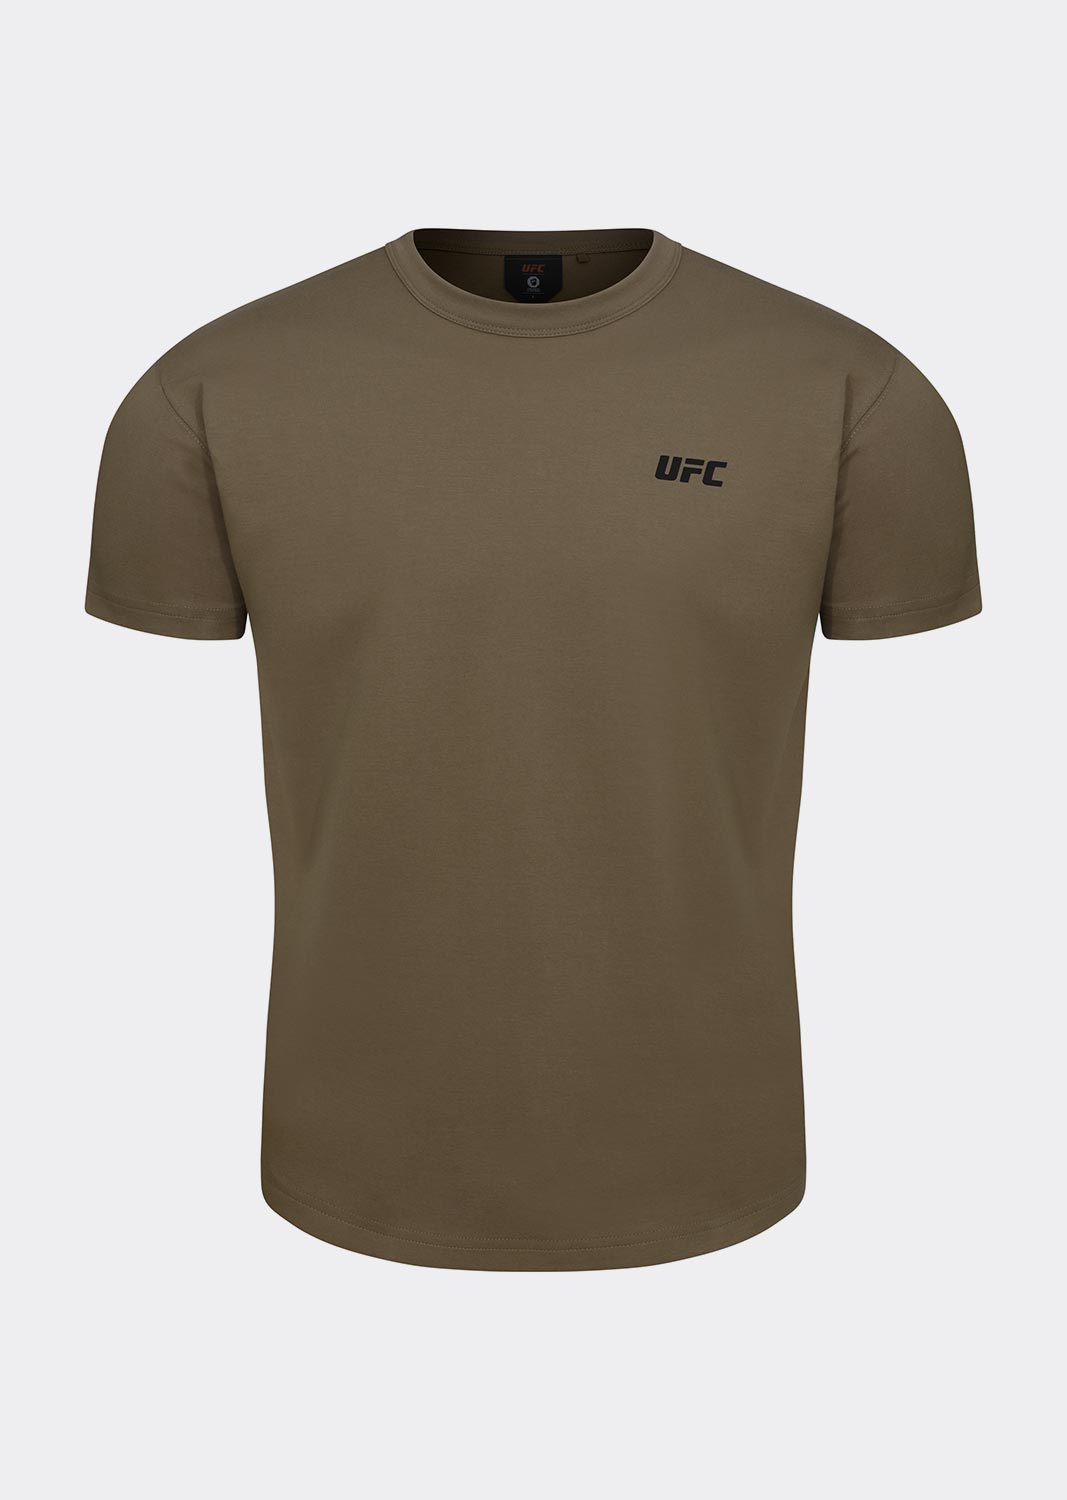 UFC 피지컬 레귤러핏 반팔 티셔츠 브라운 U2SSV2132BR